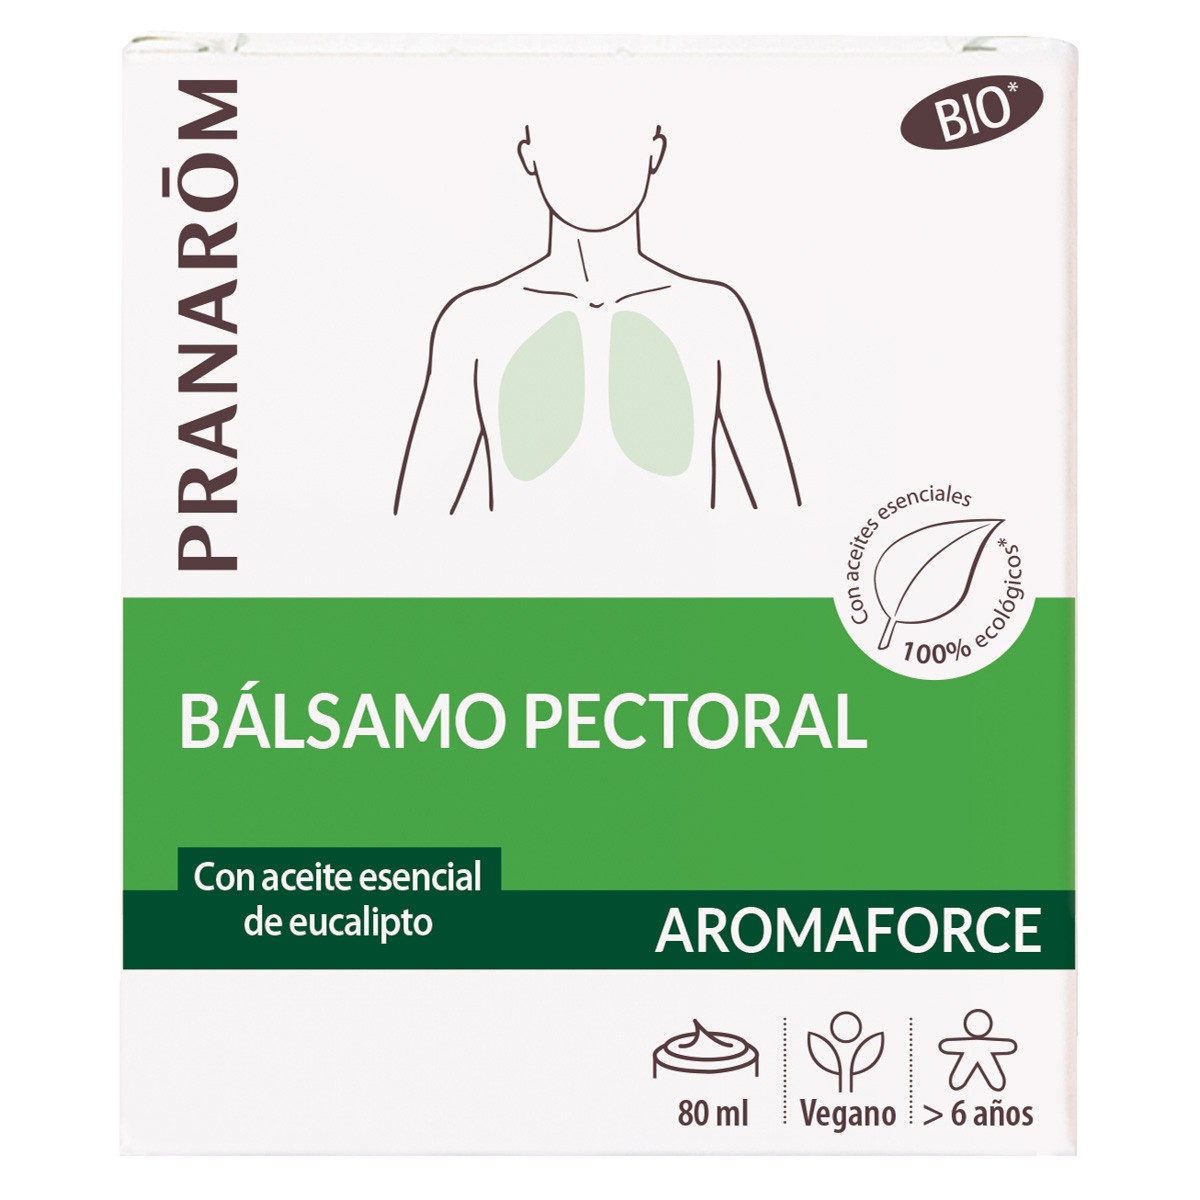 Aromaforce pectoral balsamo bio 80 ml